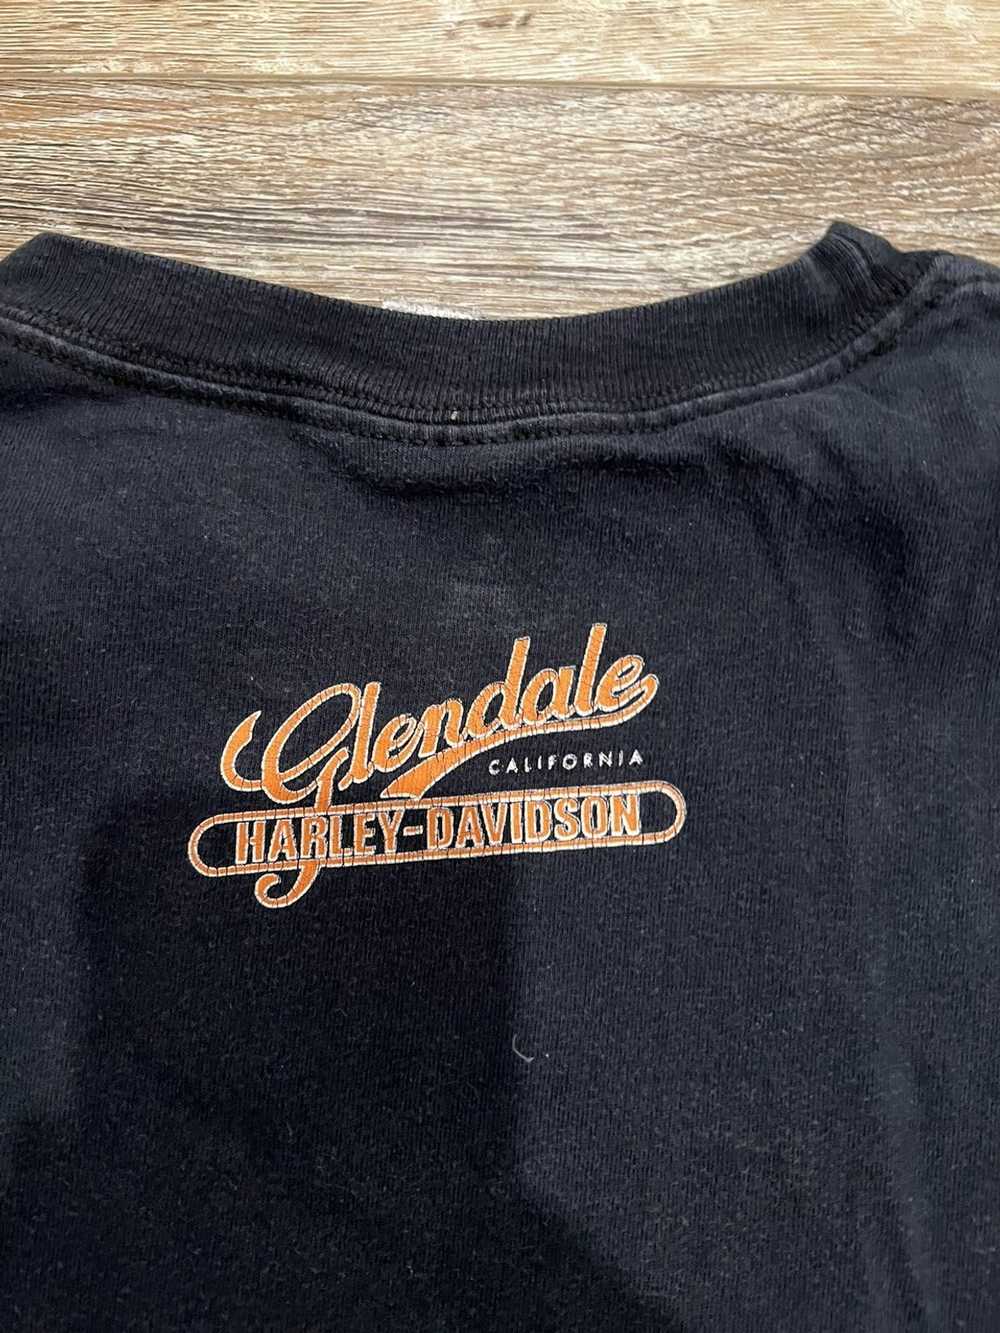 Harley Davidson Harley Davidson Glendale t shirt - image 5